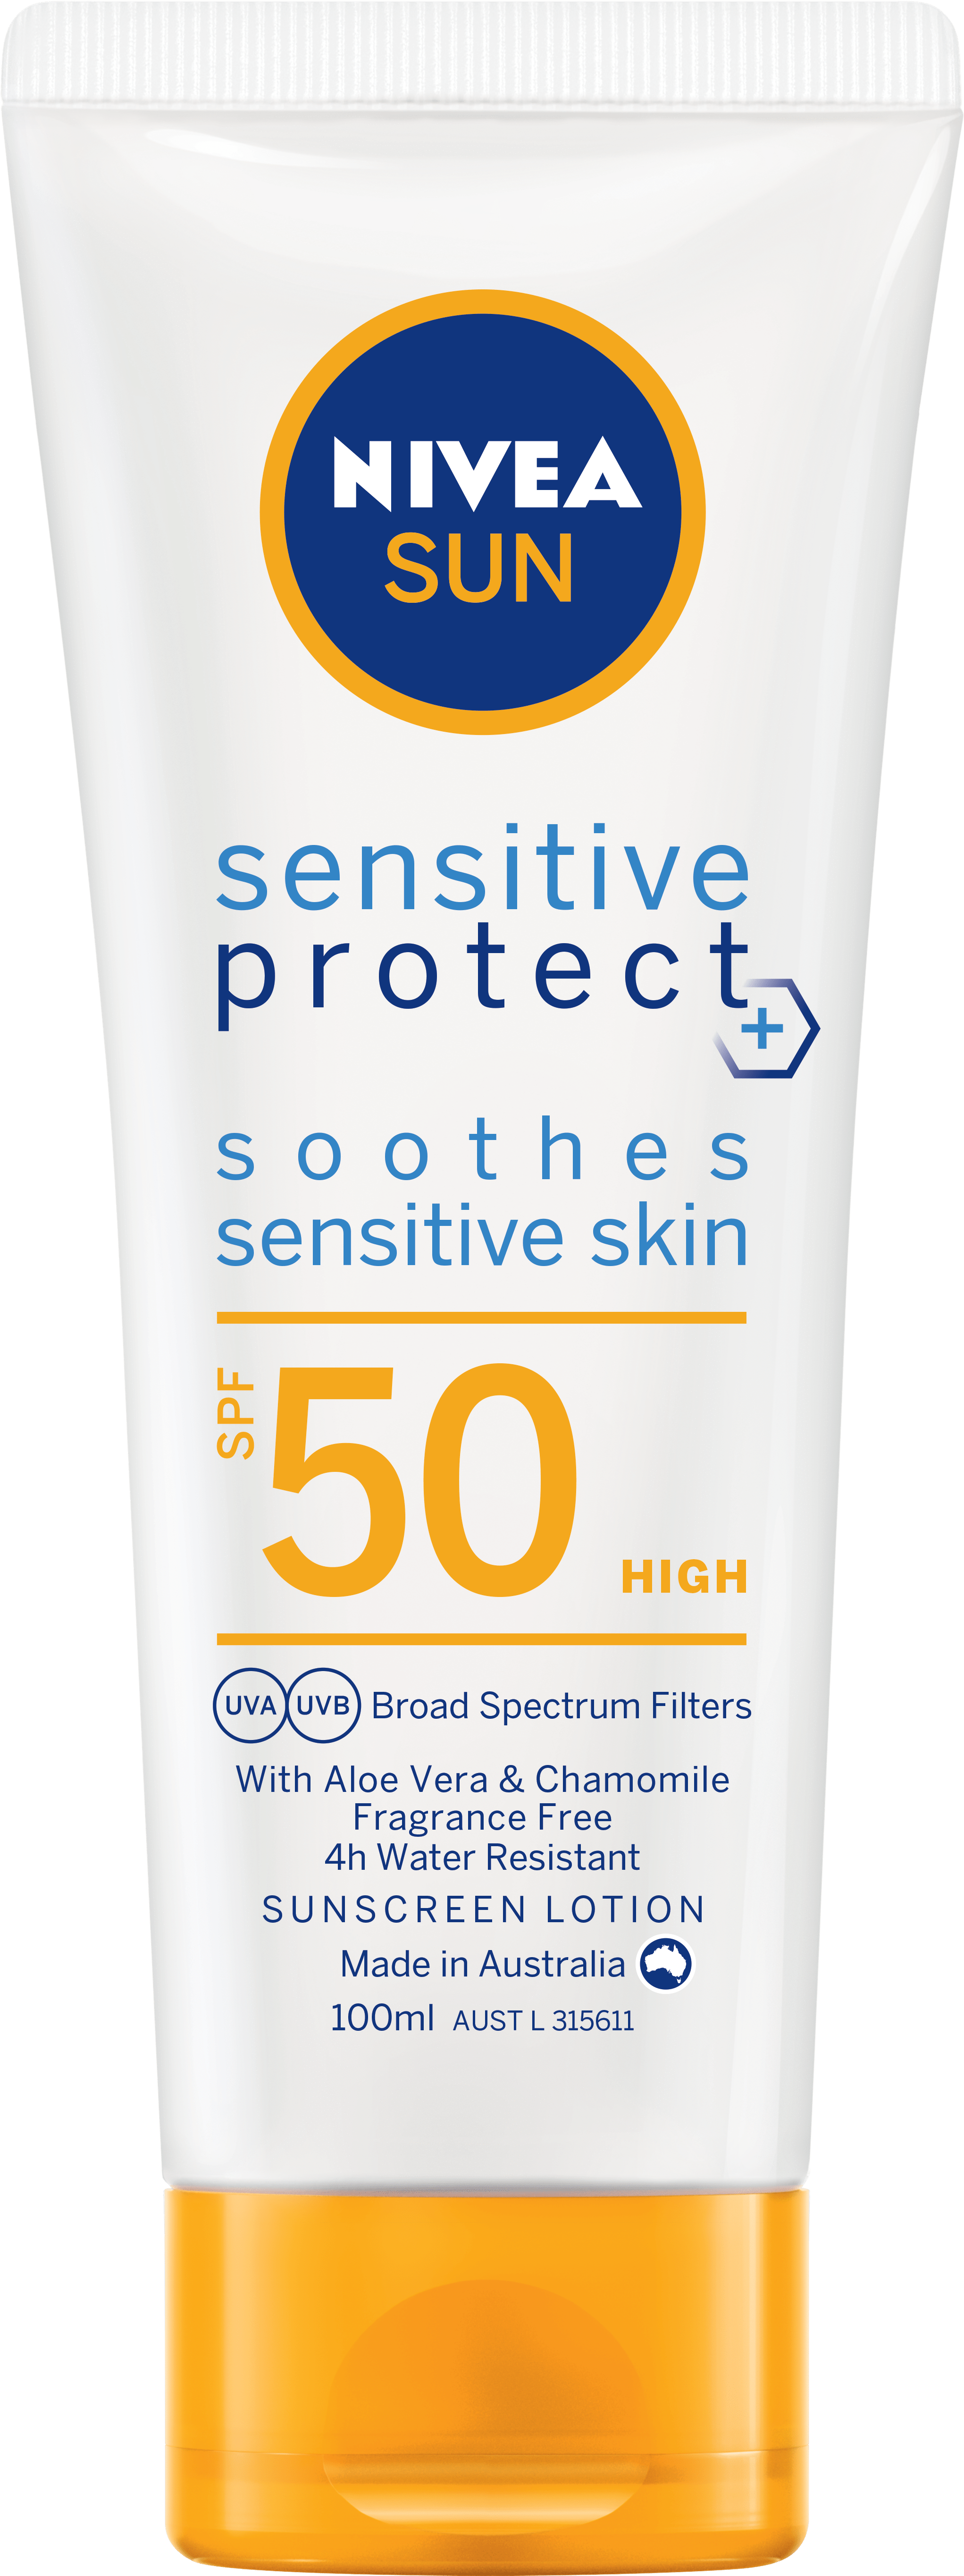 Sensitive Protect SPF50 Sunscreen Lotion